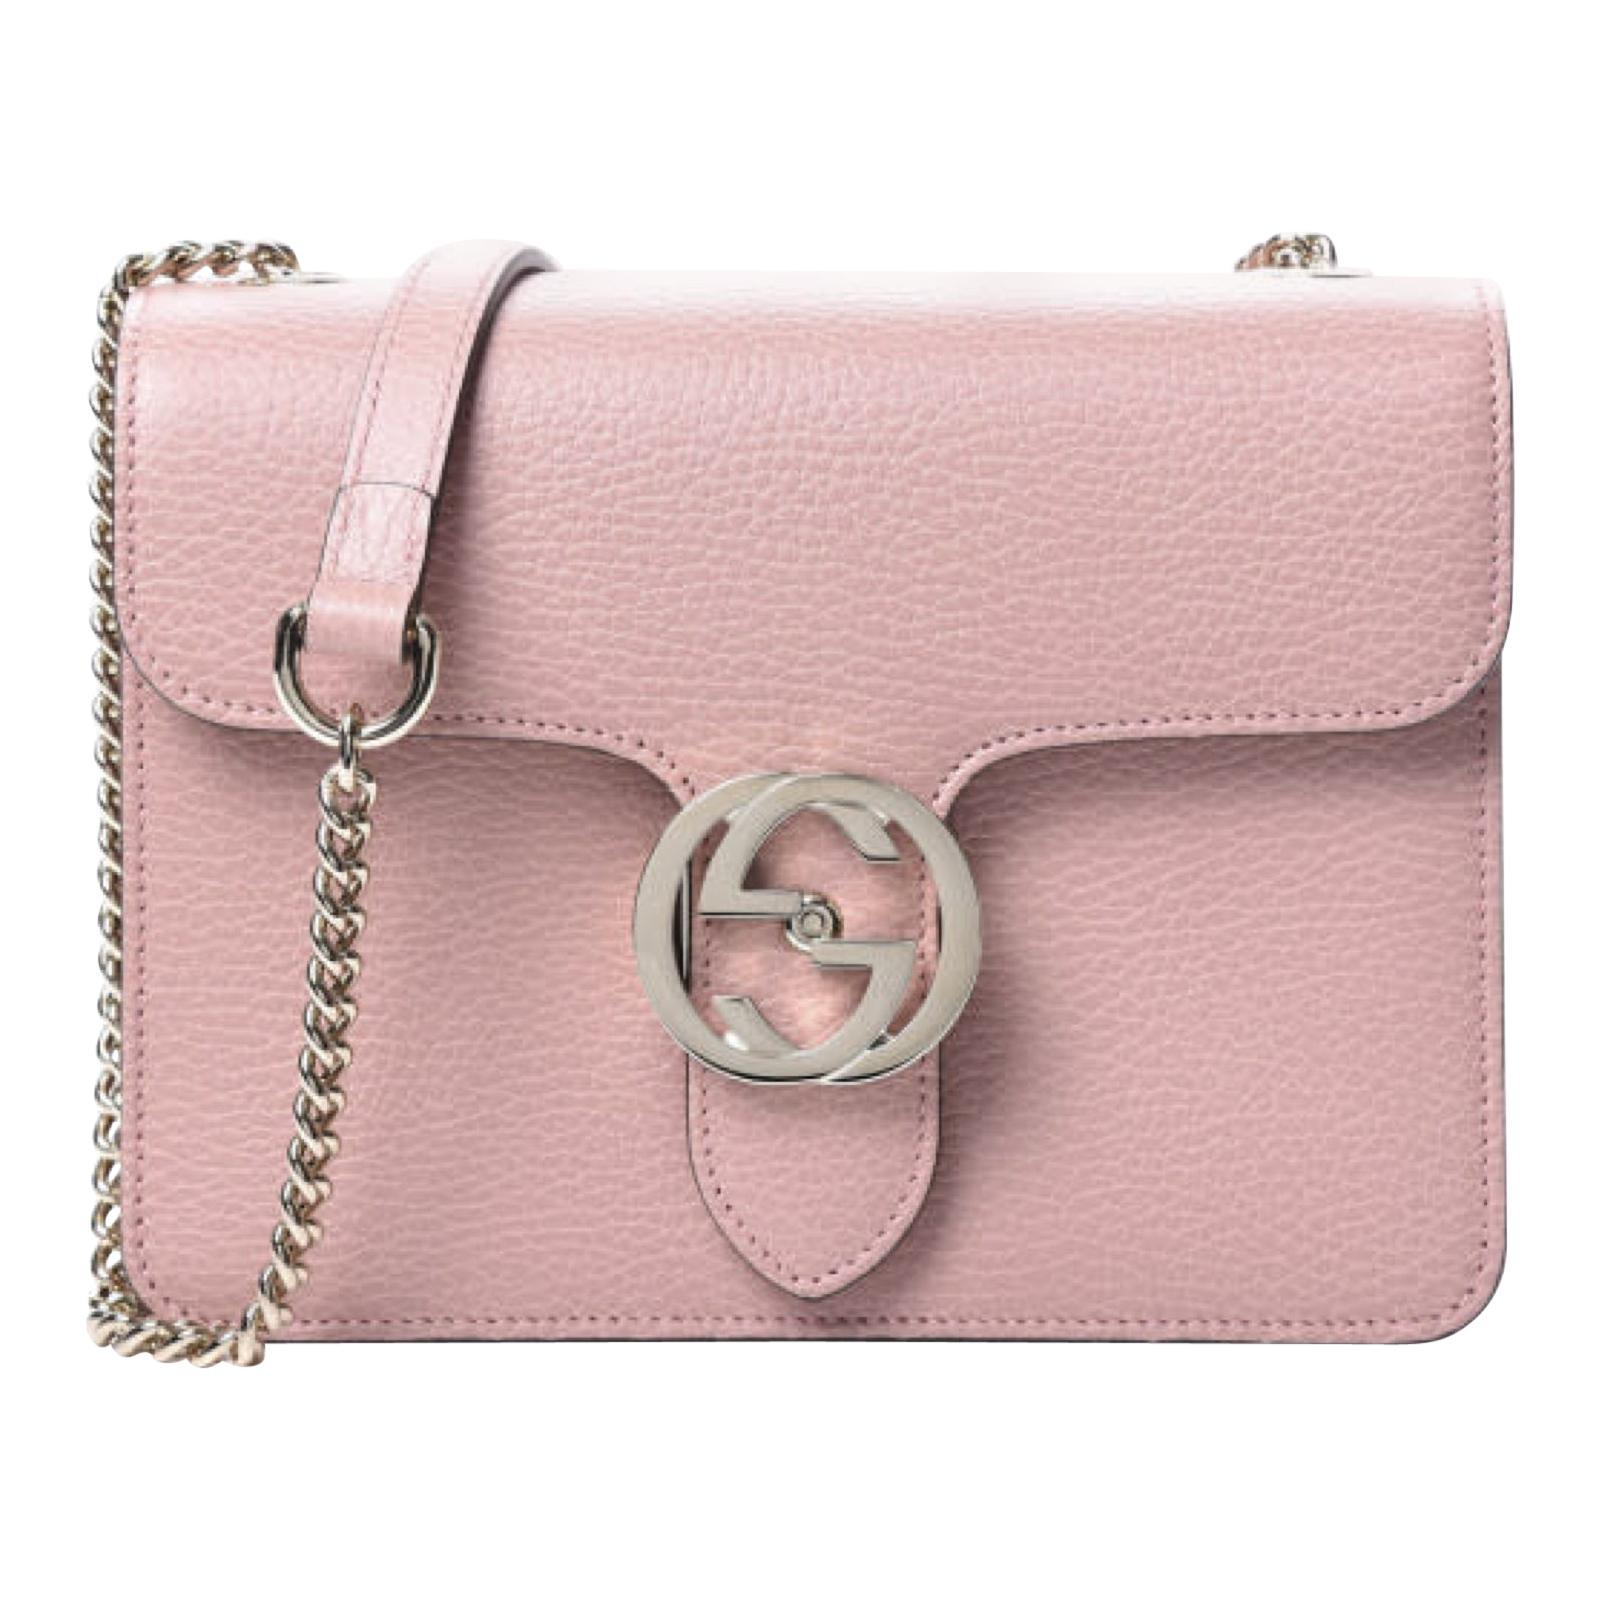 Gucci Dollar Calfskin Interlocking GG Small Shoulder Bag - Soft Pink